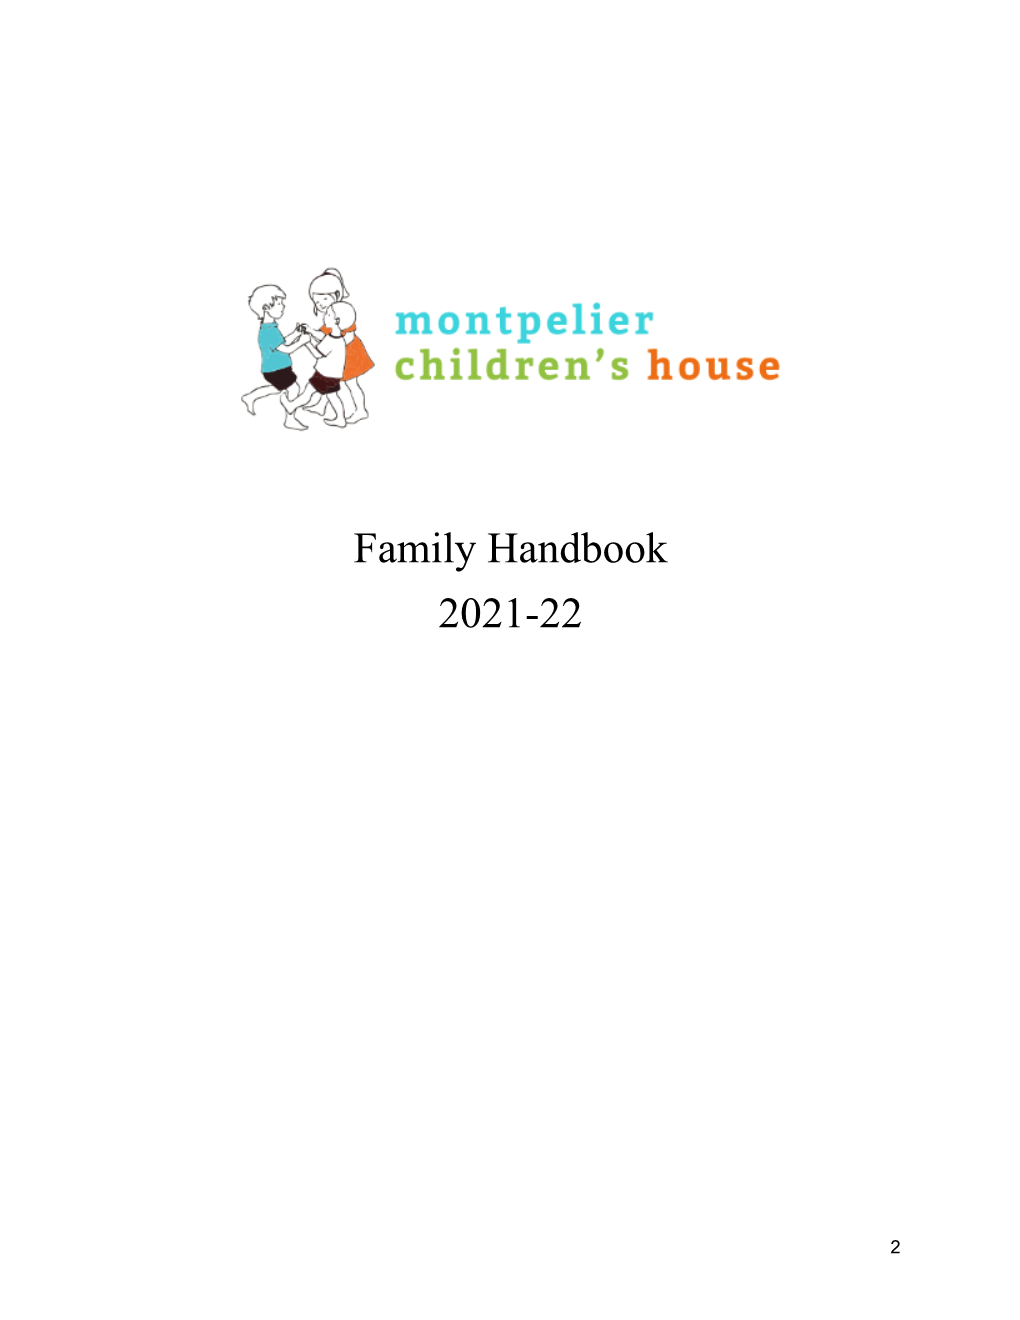 2021-22 Family Handbook